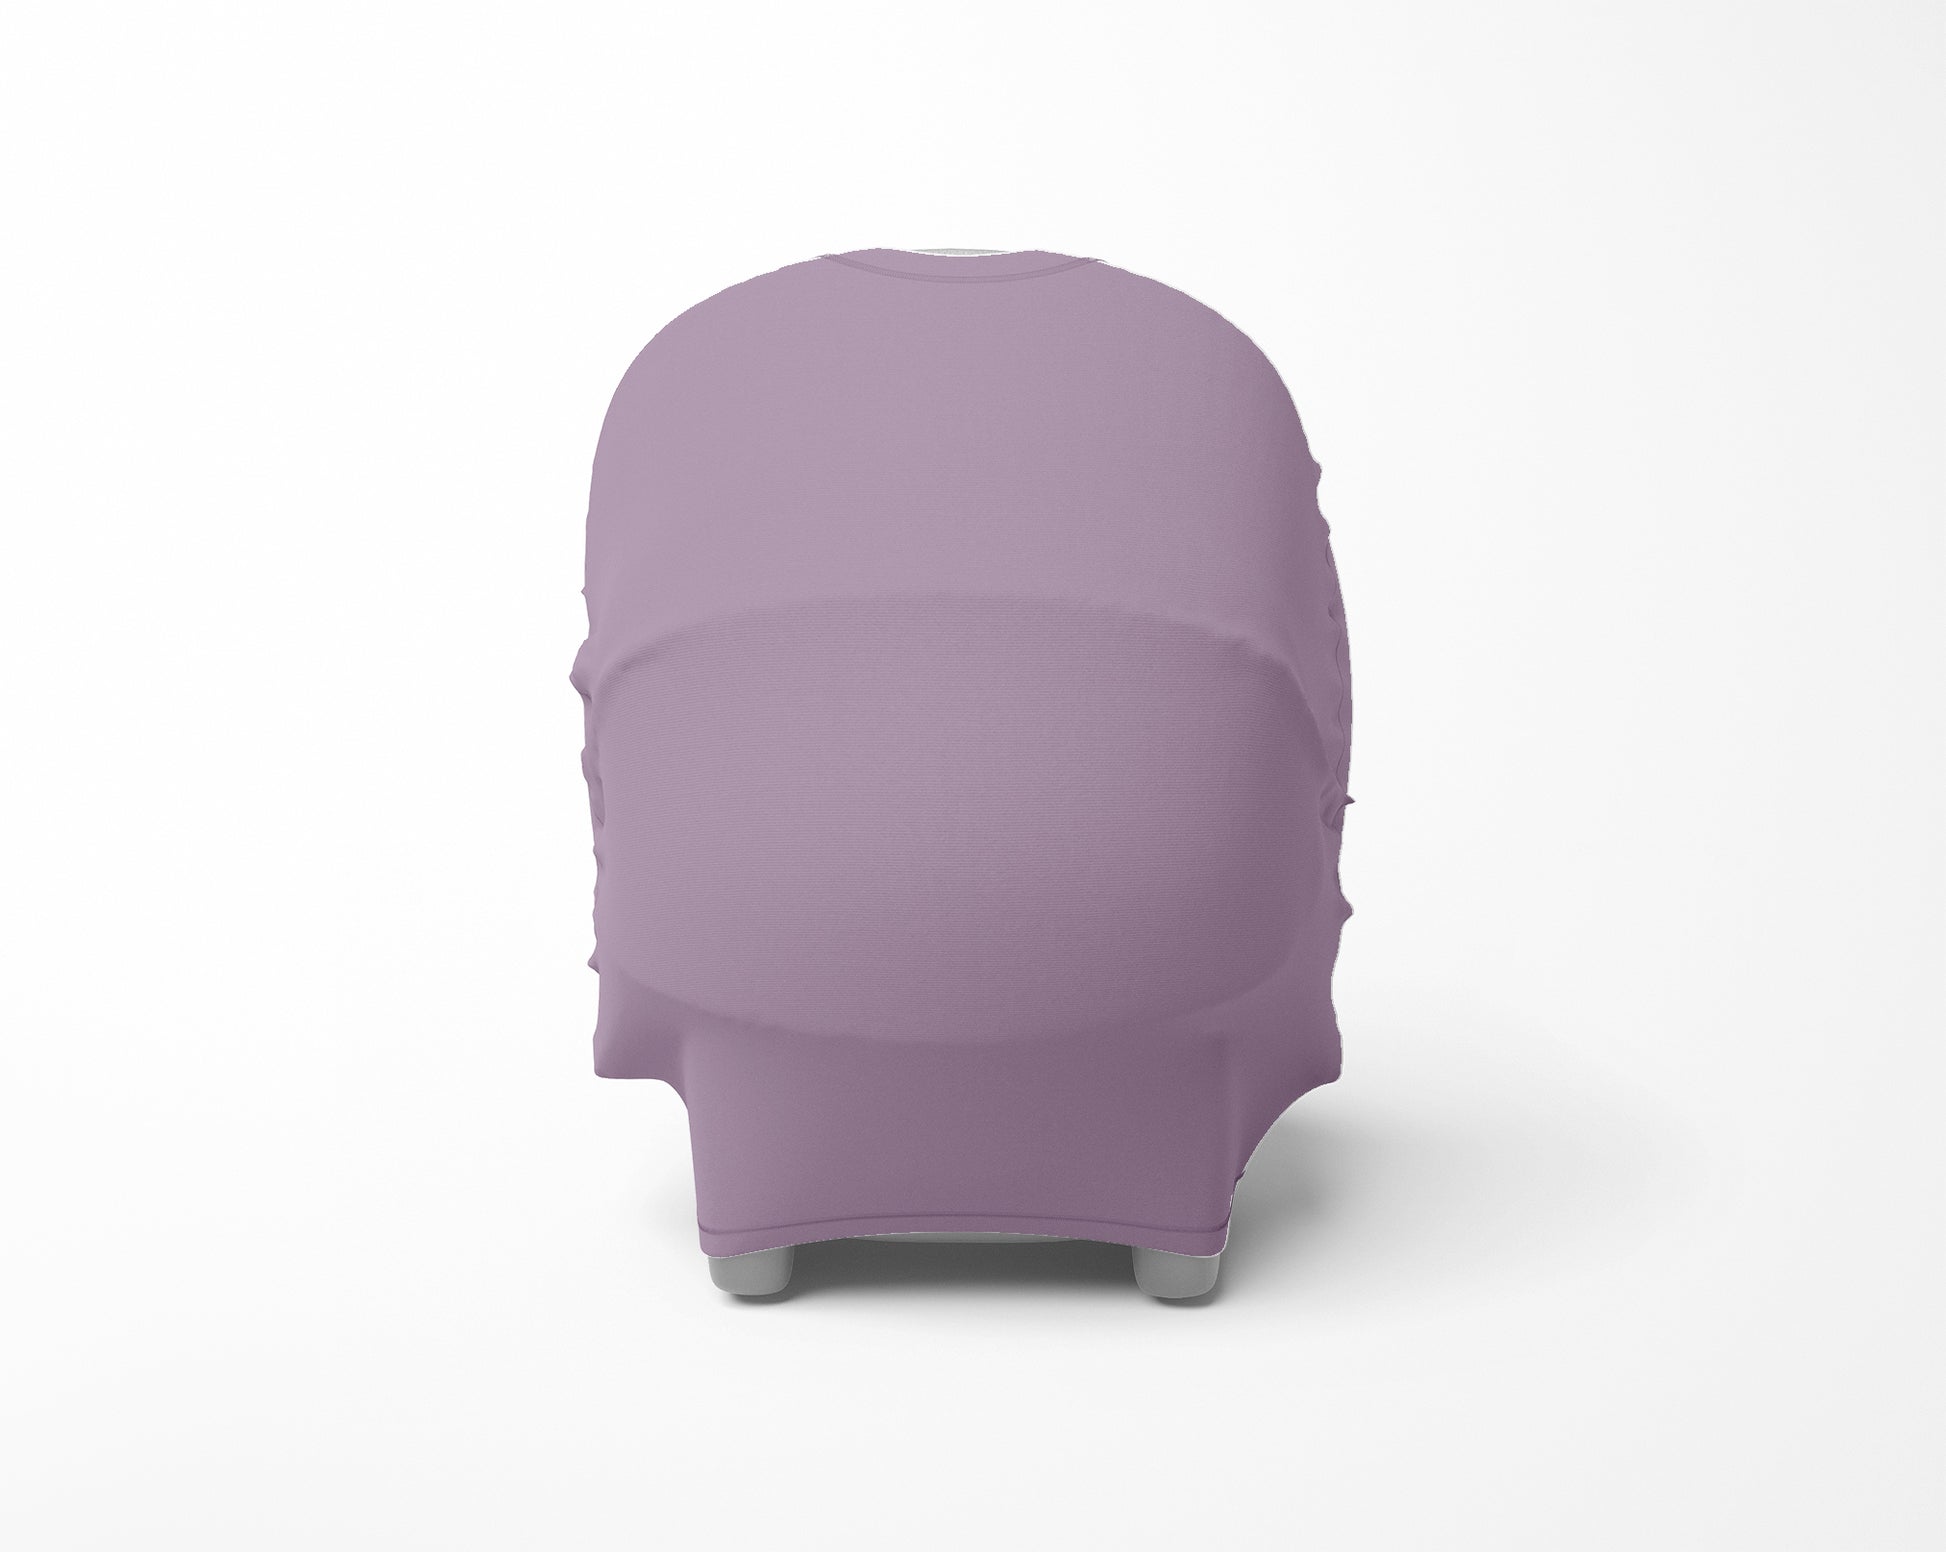 Lavender Car Seat Covers